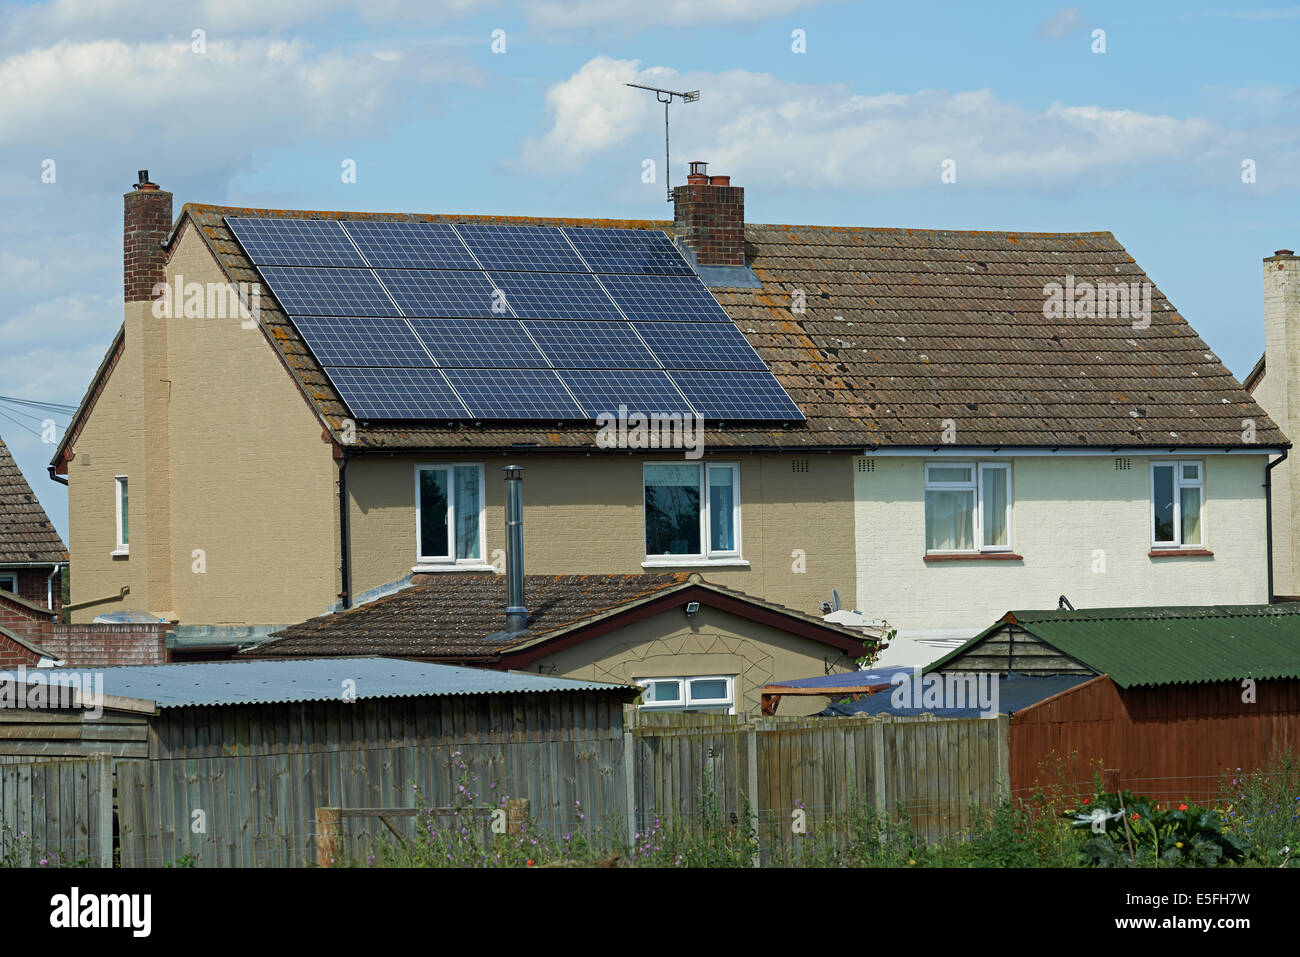 Residential house with solar energy array, Alderton, Suffolk, UK. Stock Photo